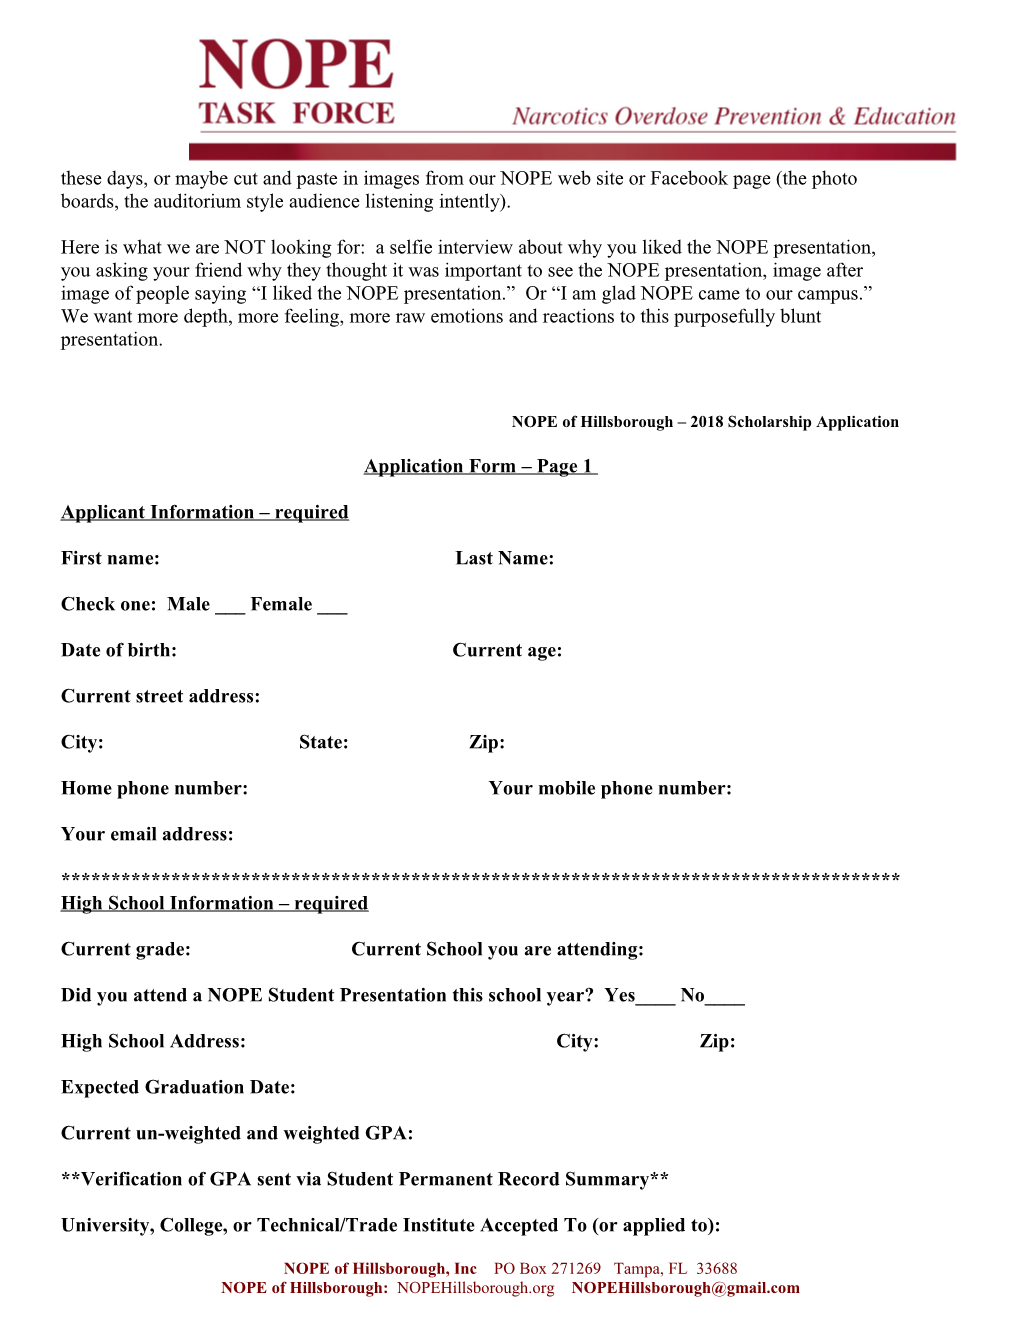 NOPE of Hillsborough 2018 Scholarship Application